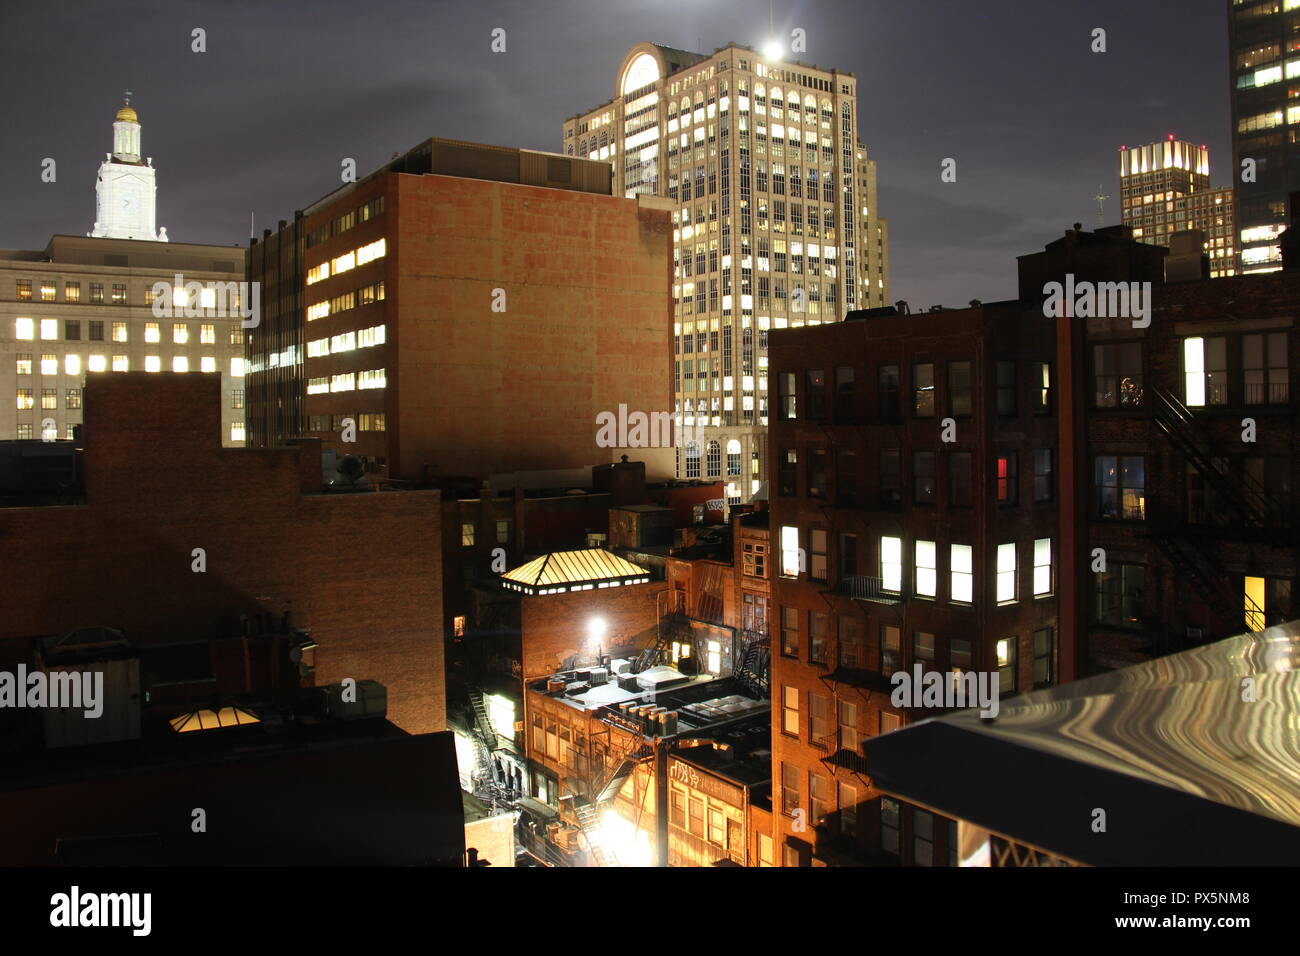 Big American city by night. Stock Photo